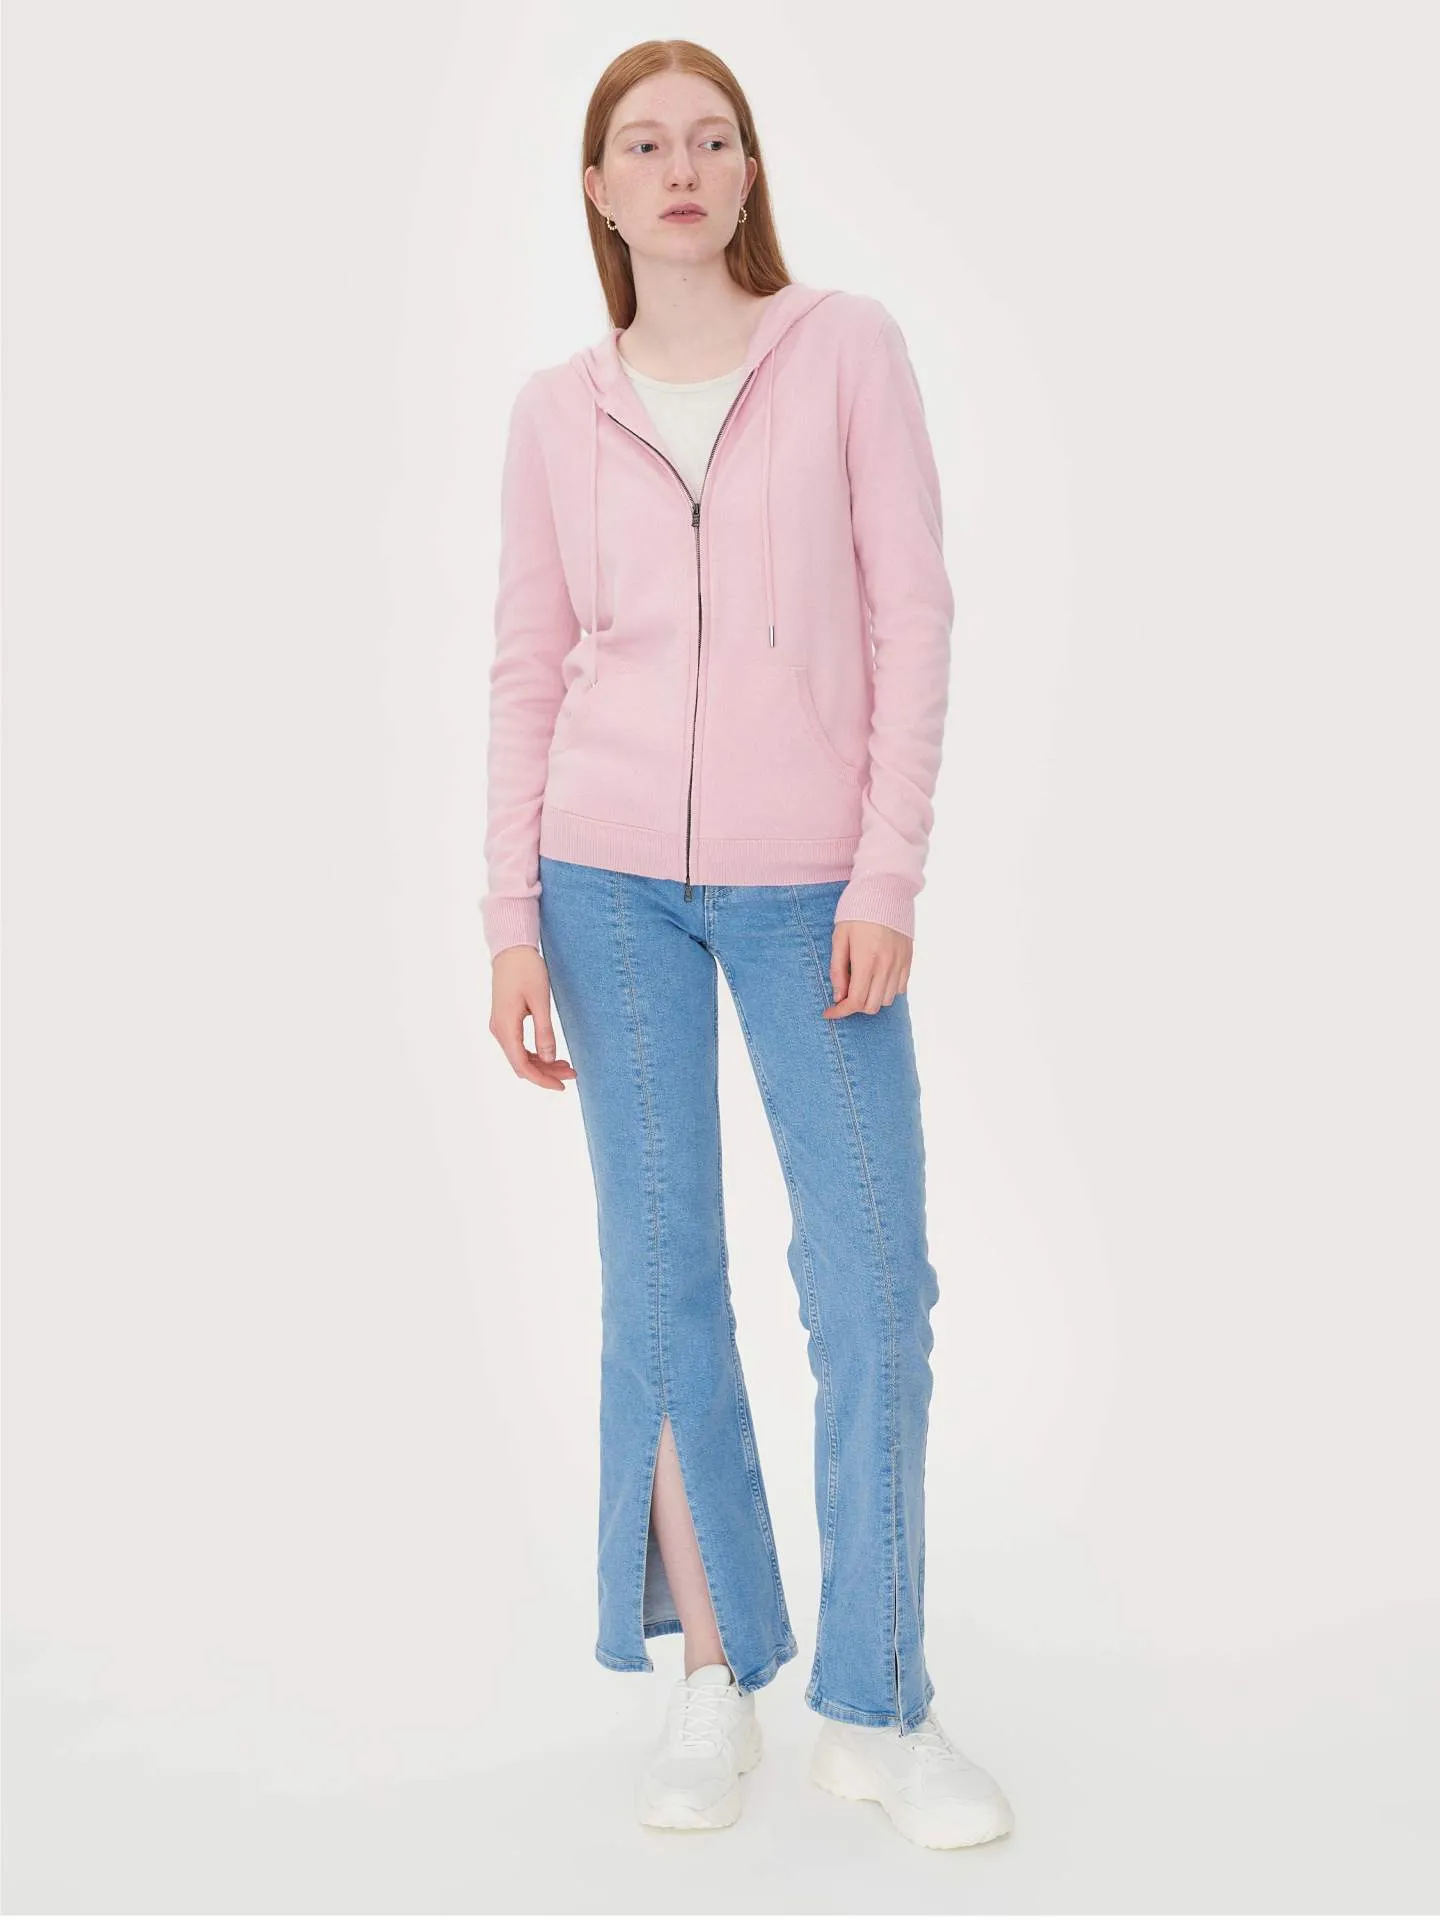 Women's Cashmere Full Zip Hoodie Almond Blossom - Gobi Cashmere